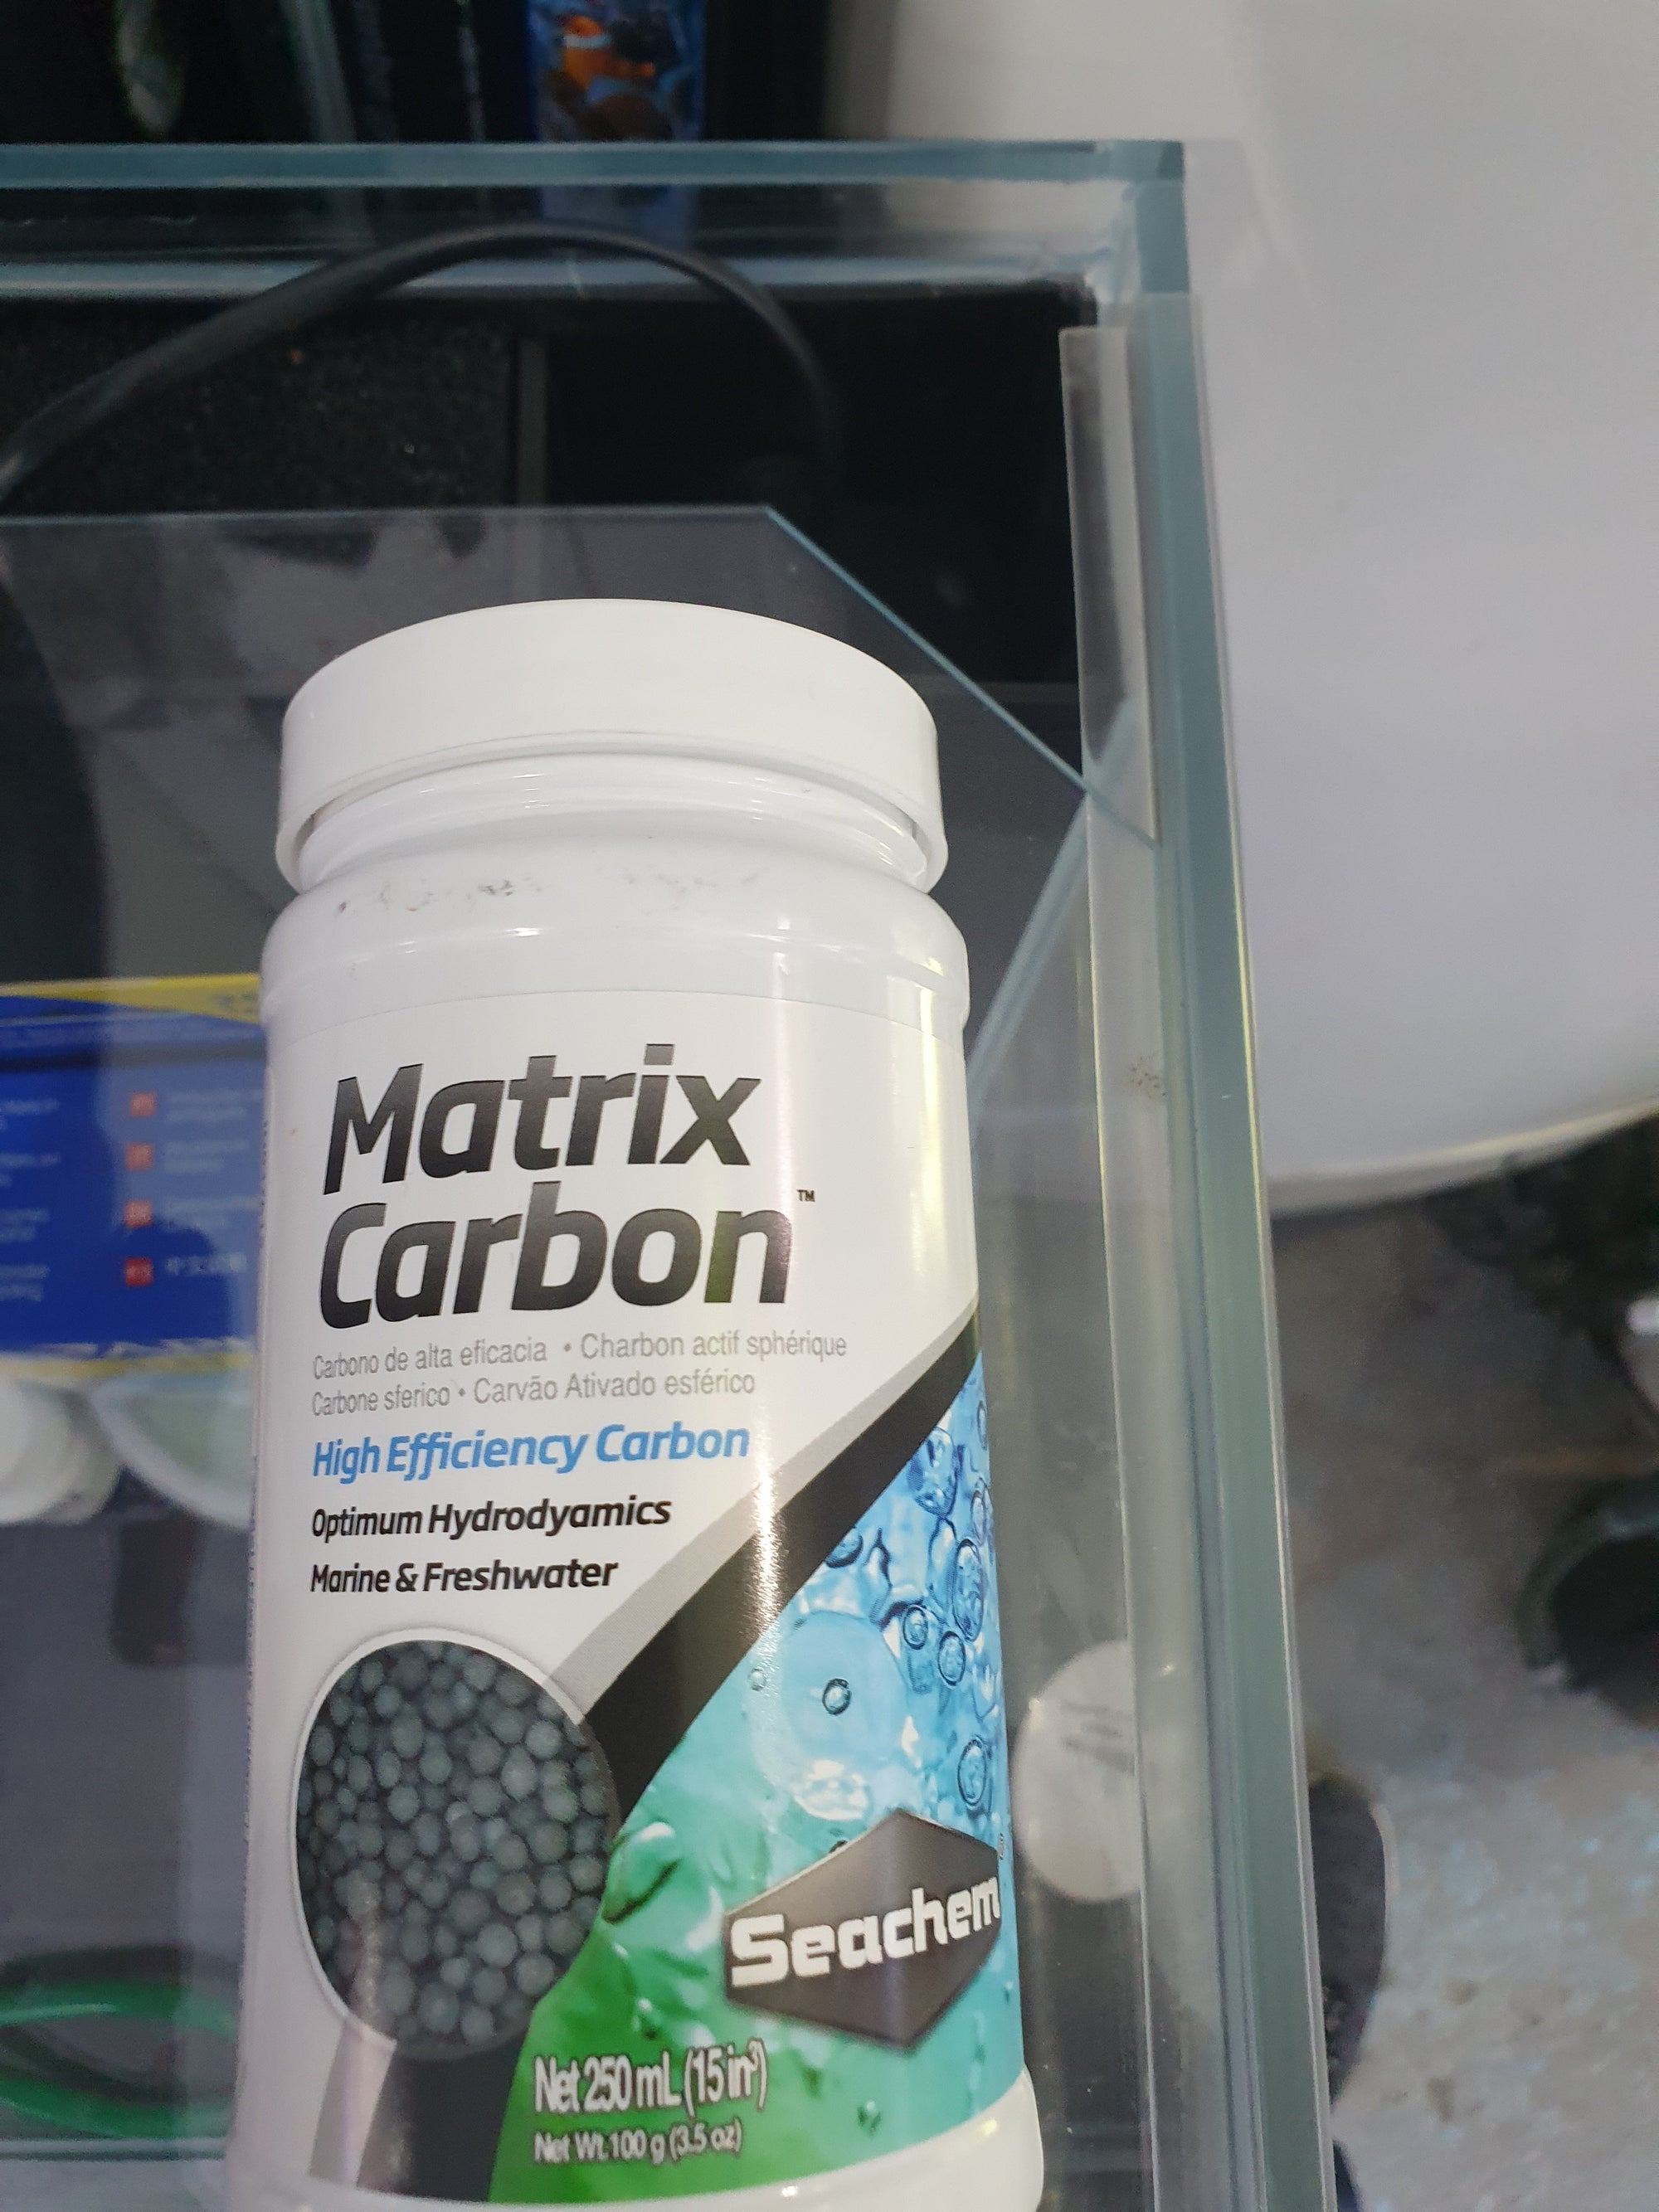 Seachem Matrix Carbon 250ml